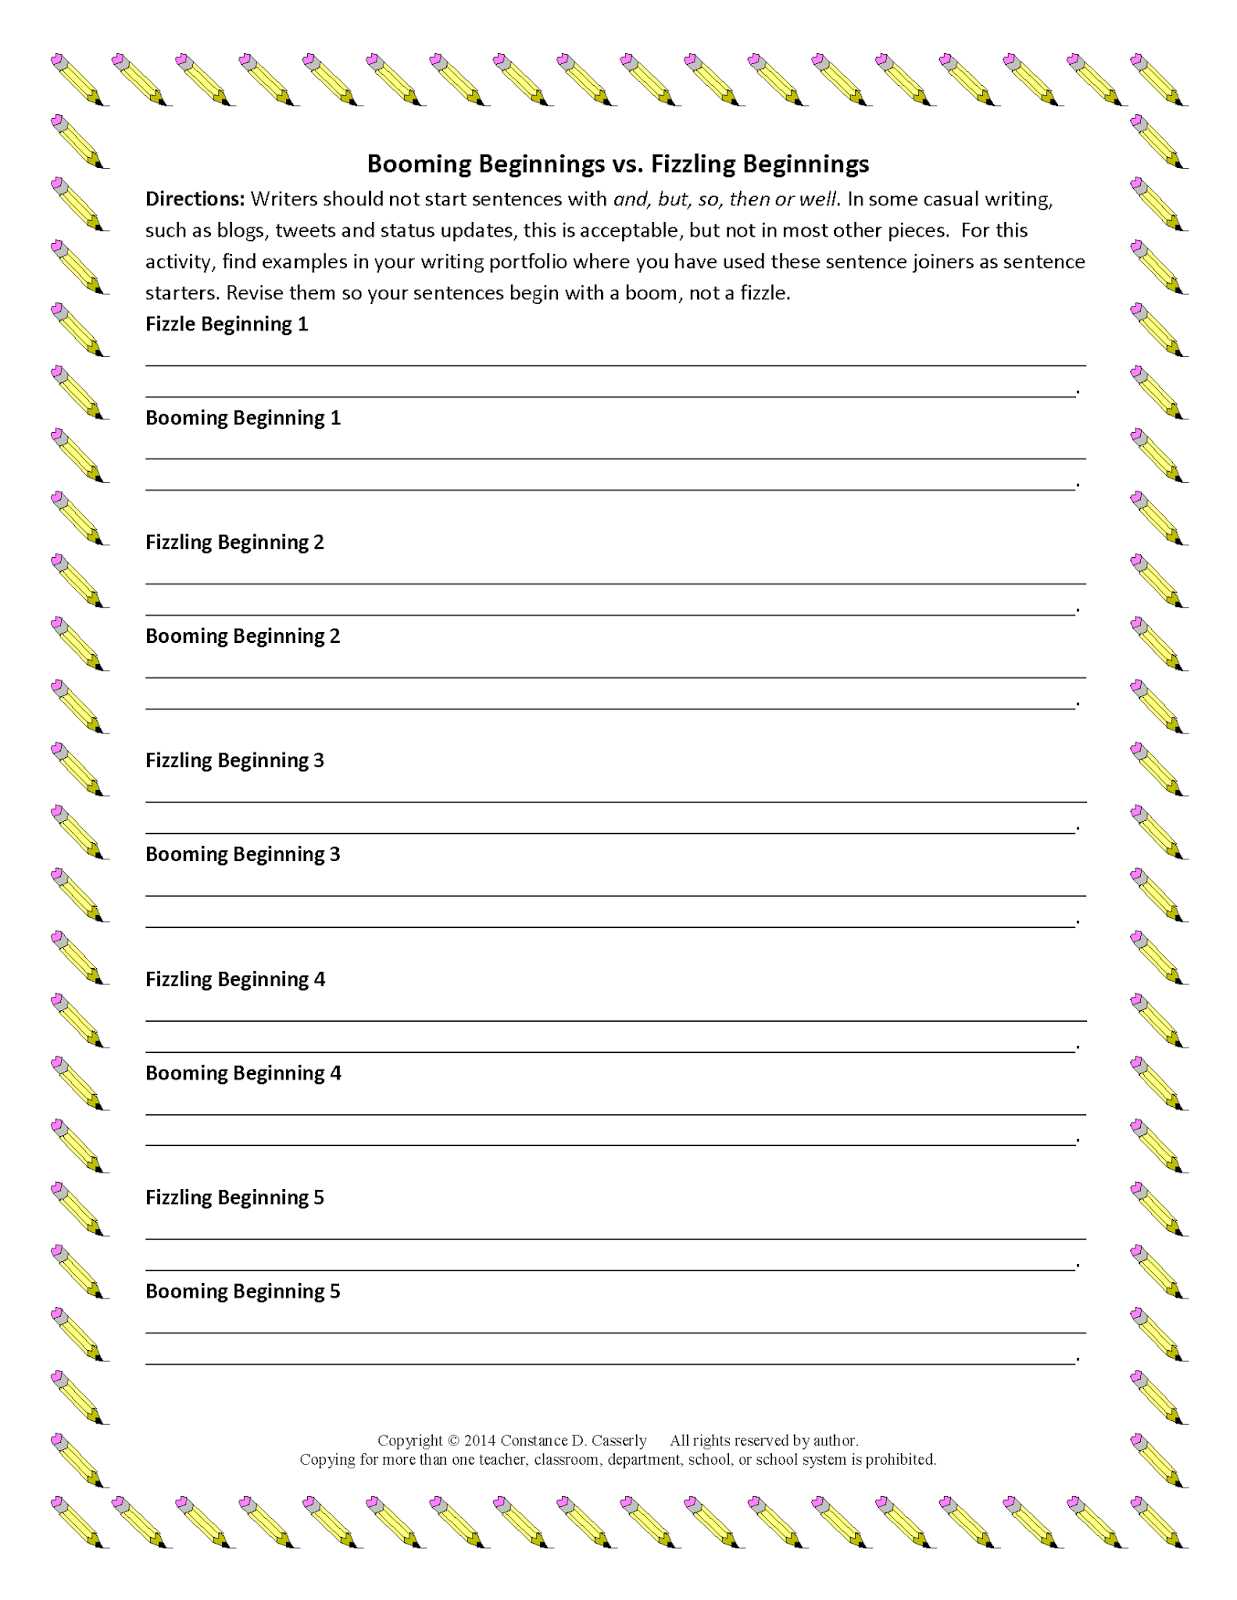 Harry Potter Genetics Worksheet Along with topic Sentence Starters for Essays Essay Writing Sentence Starters